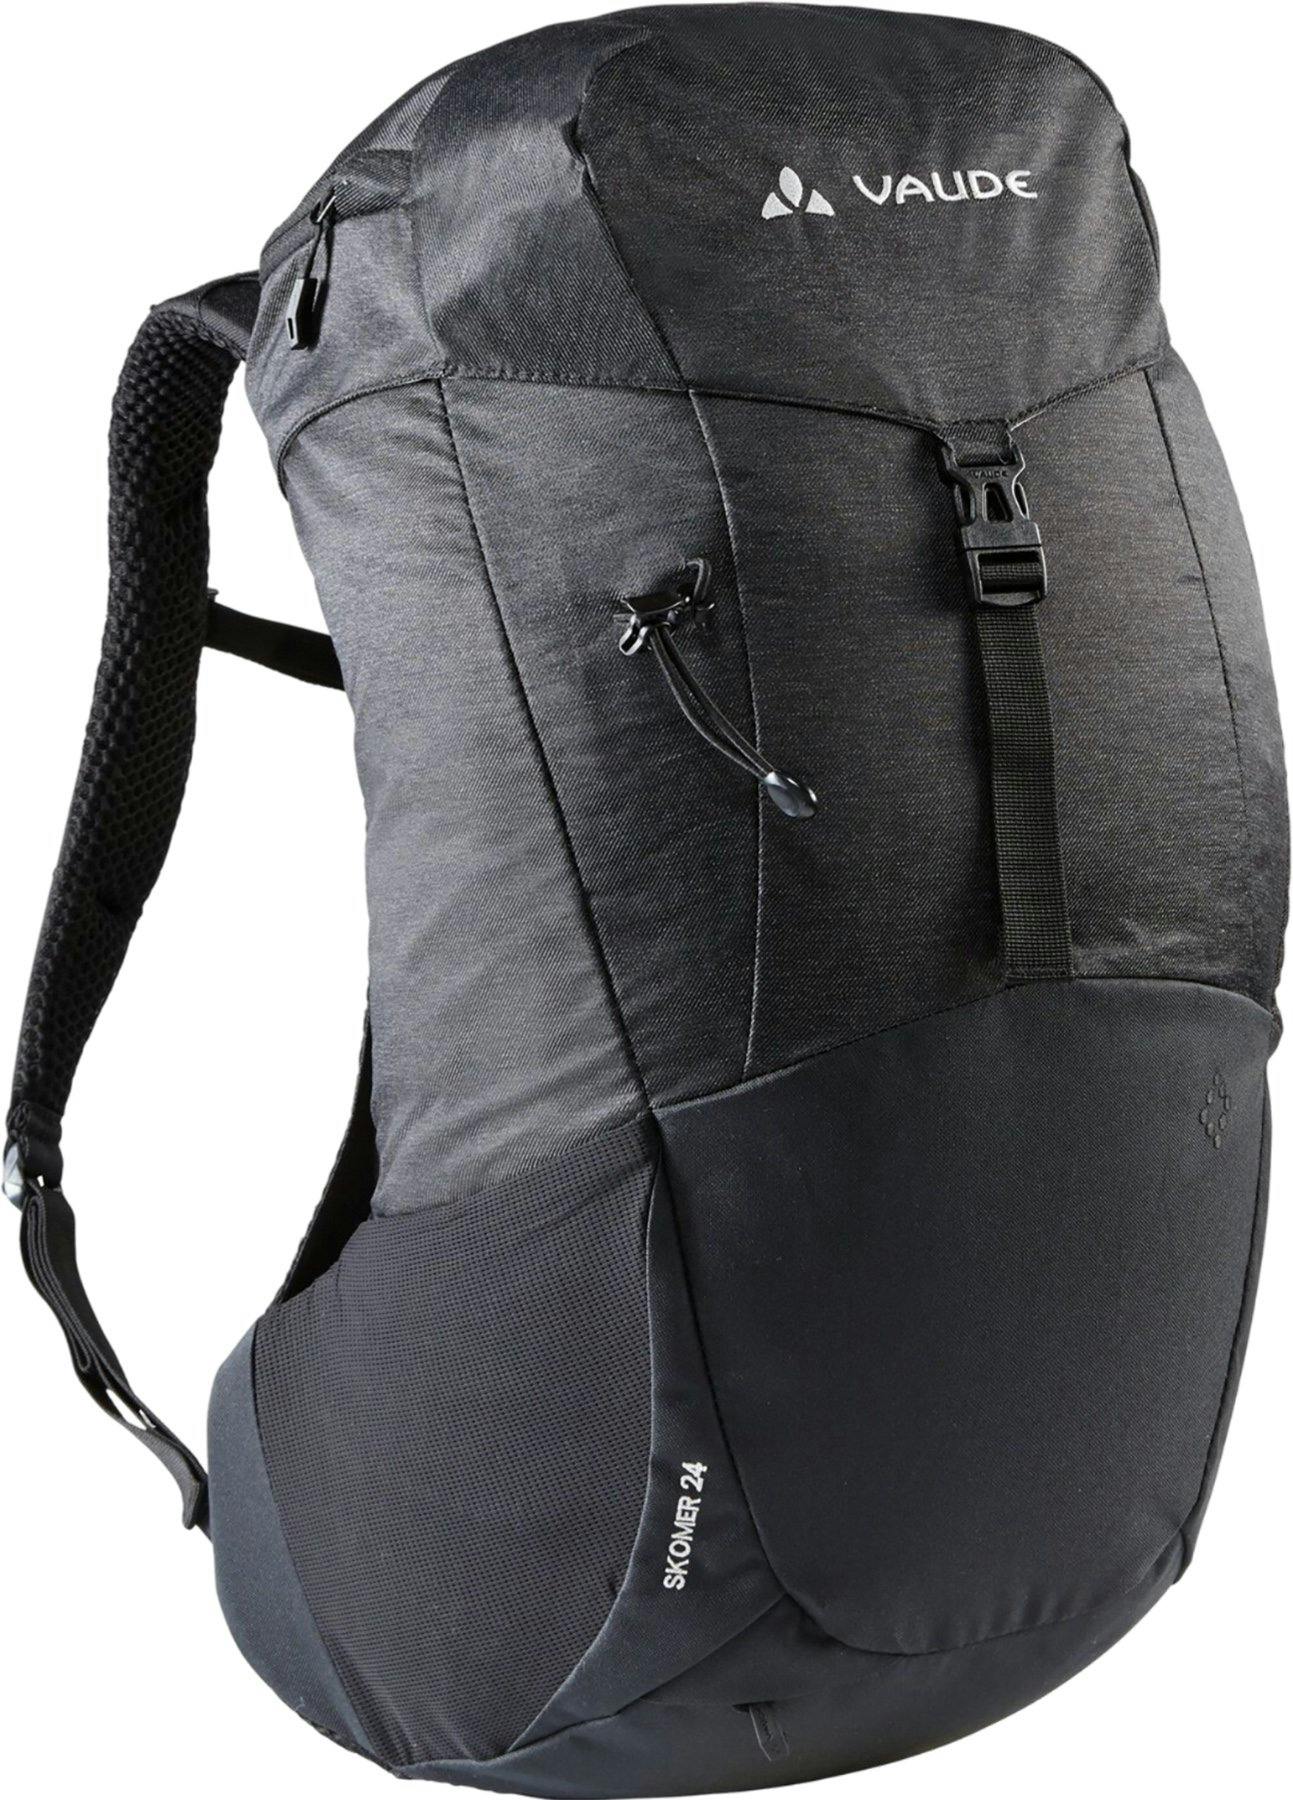 Product image for Skomer Hiking Backpack 24L - Women's